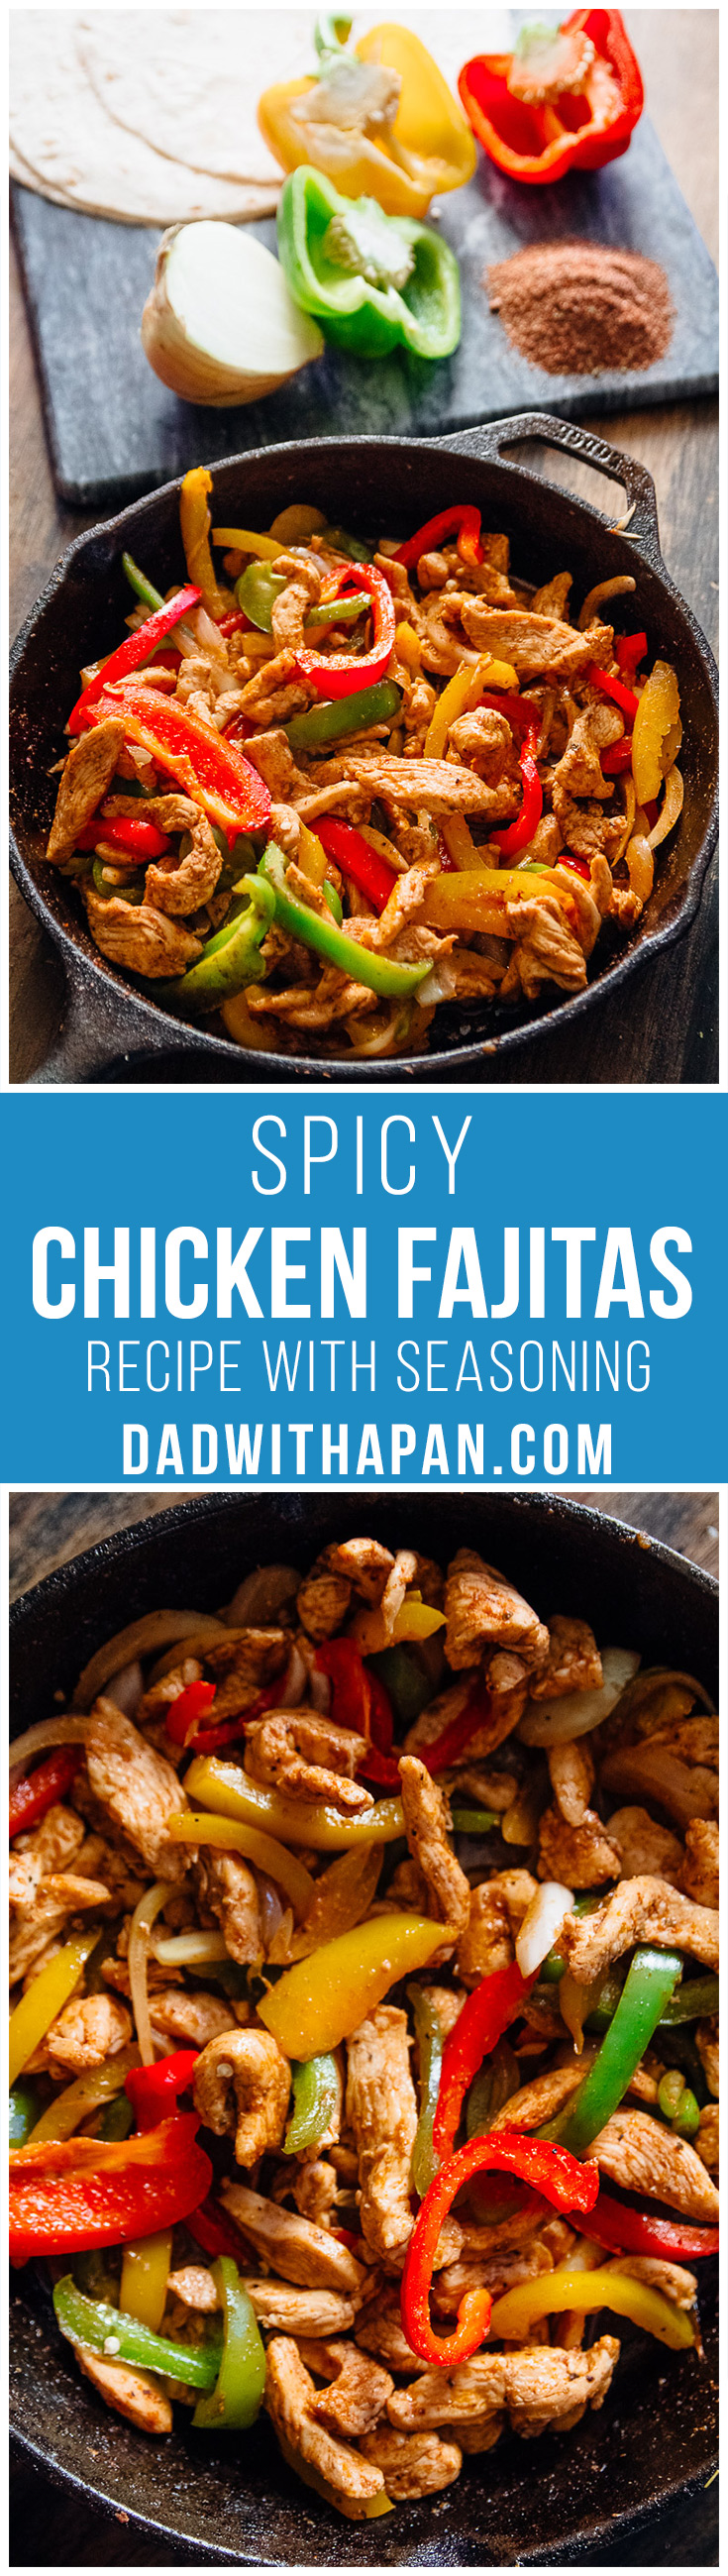 Spicy Chicken Fajitas